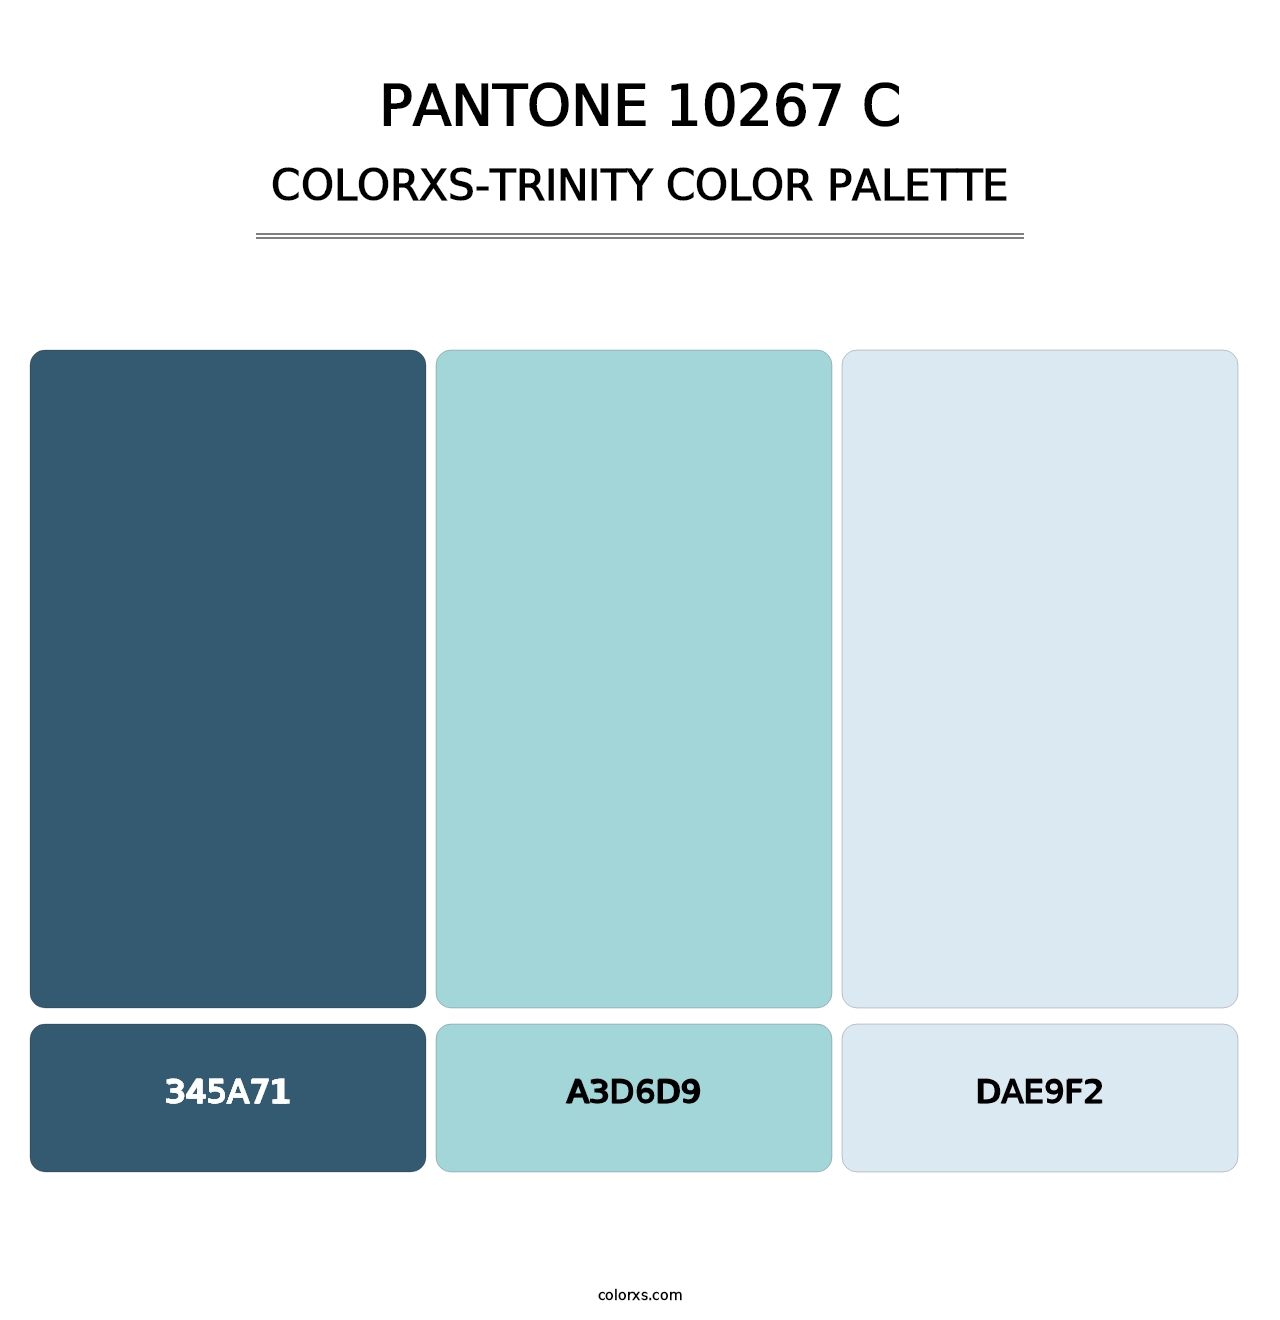 PANTONE 10267 C - Colorxs Trinity Palette